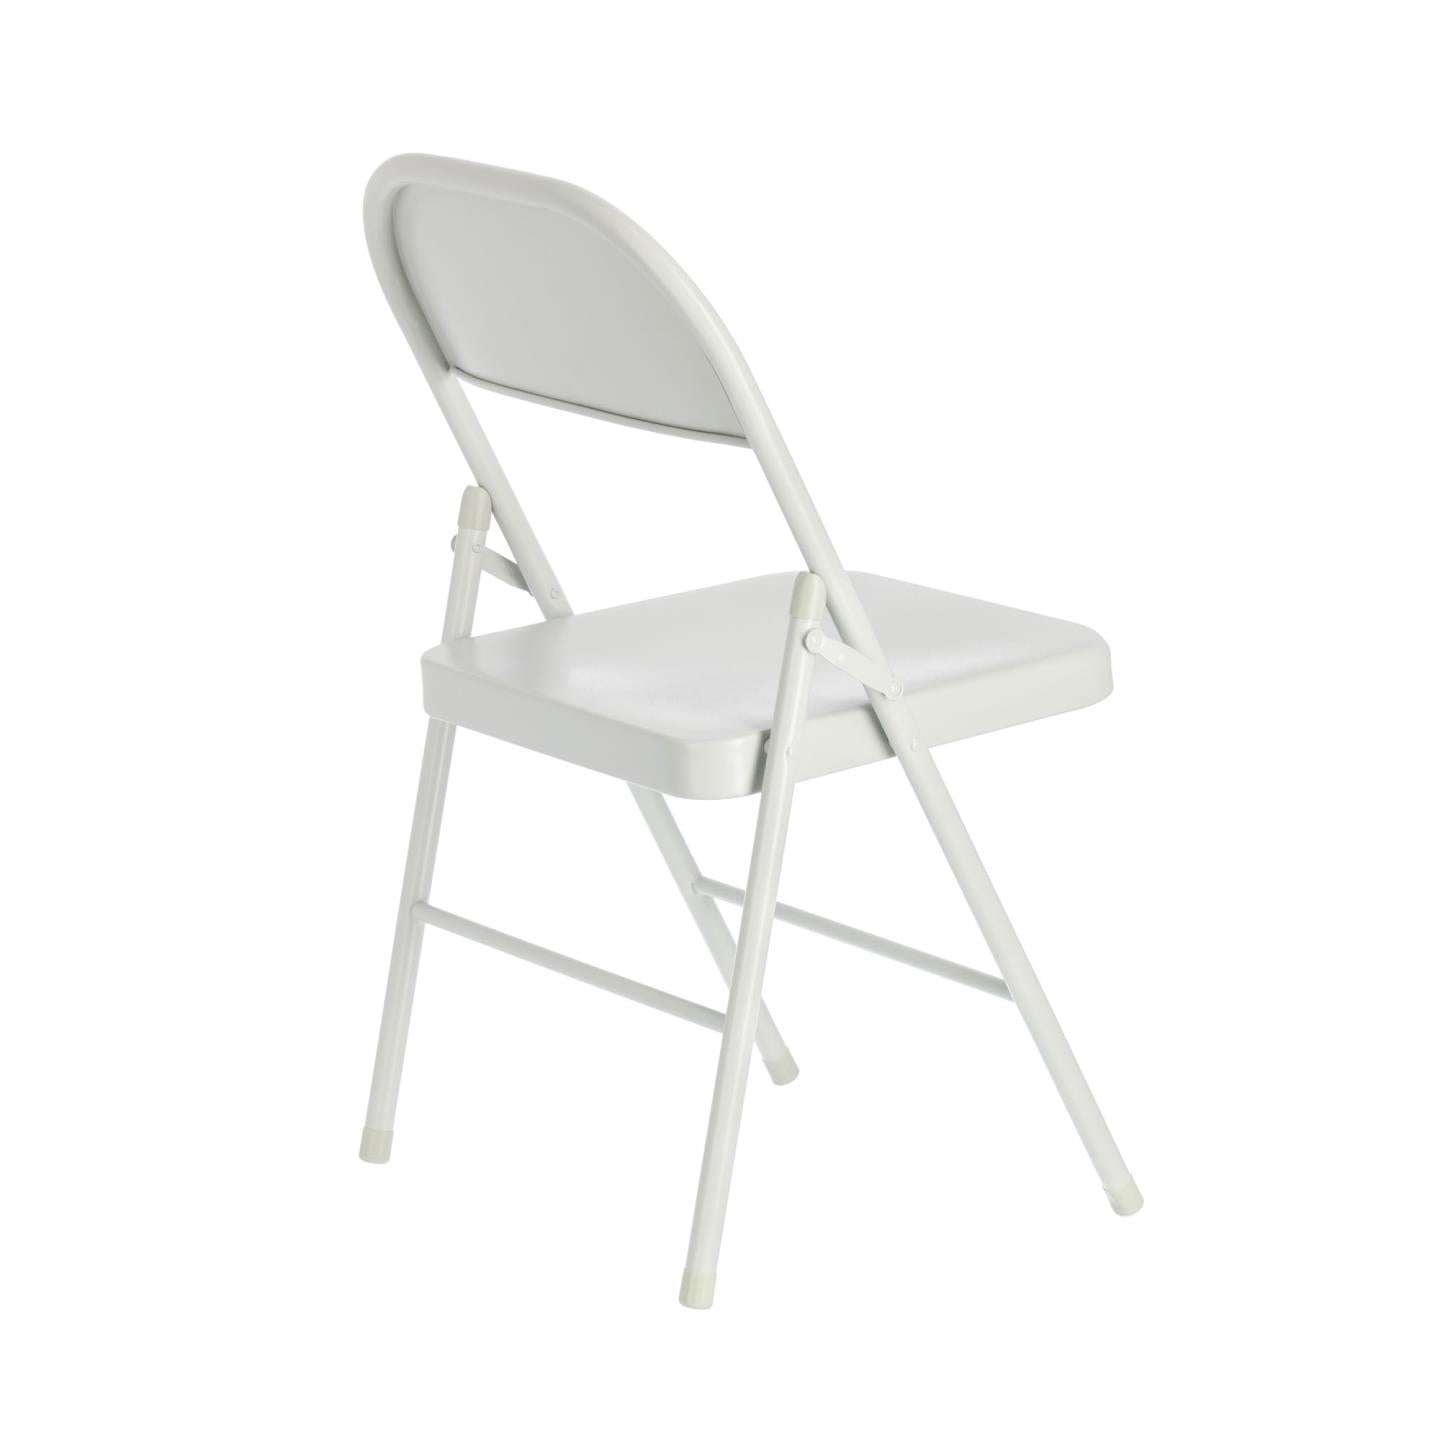 Aidana metal folding chair in light grey